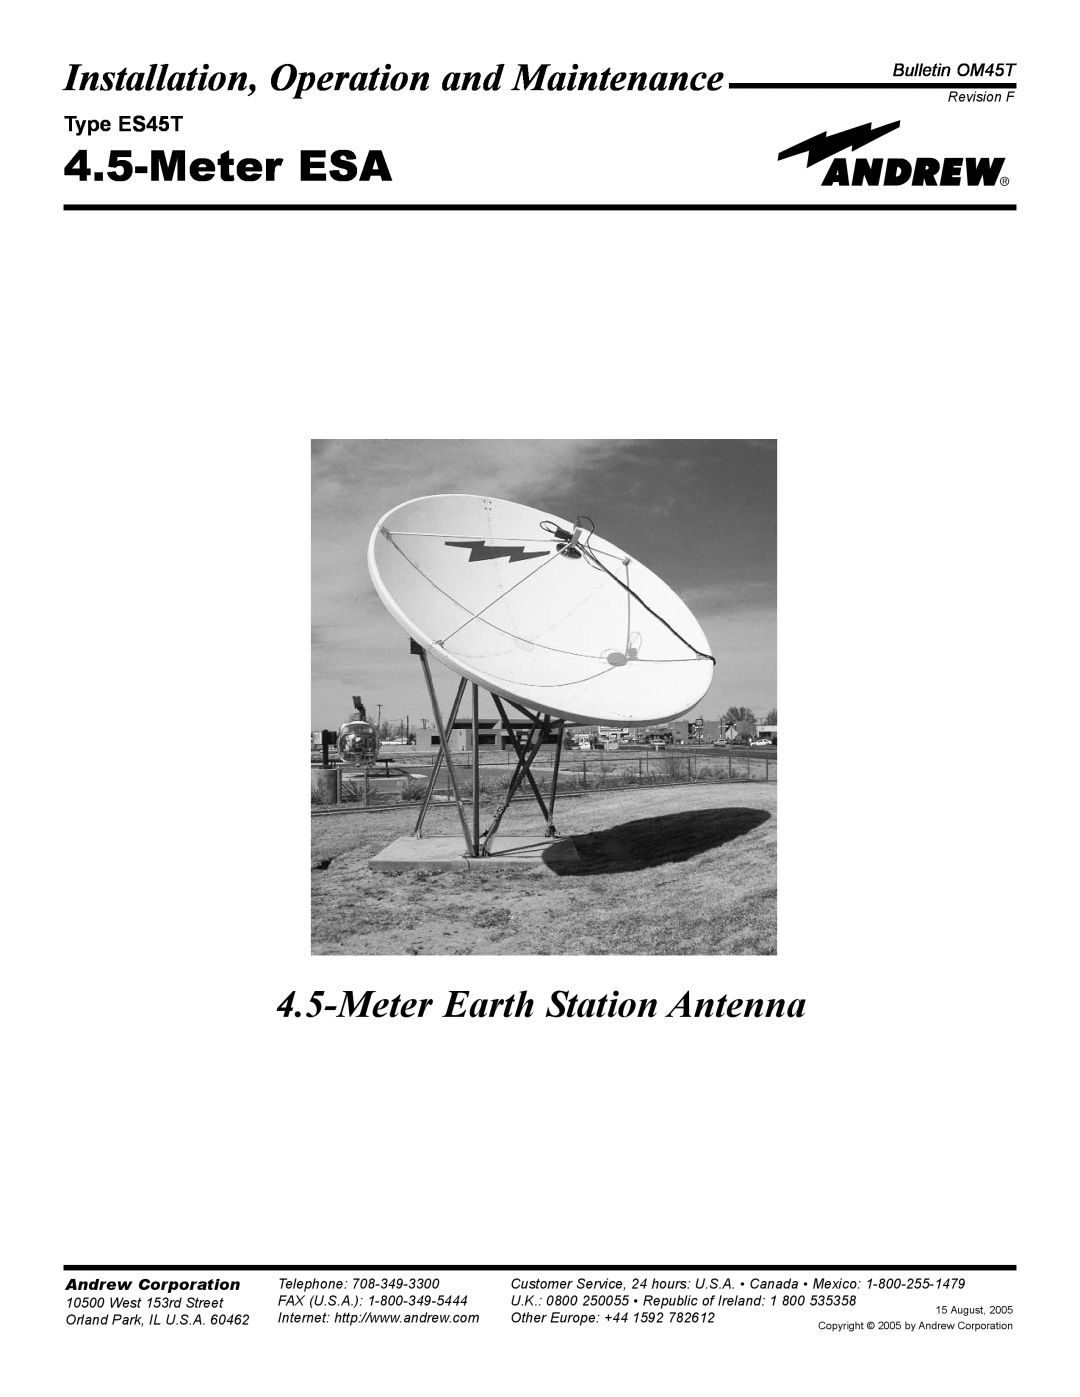 Andrew manual MeterESA, Installation, Operation and Maintenance, MeterEarth Station Antenna, Type ES45T, Bulletin OM45T 